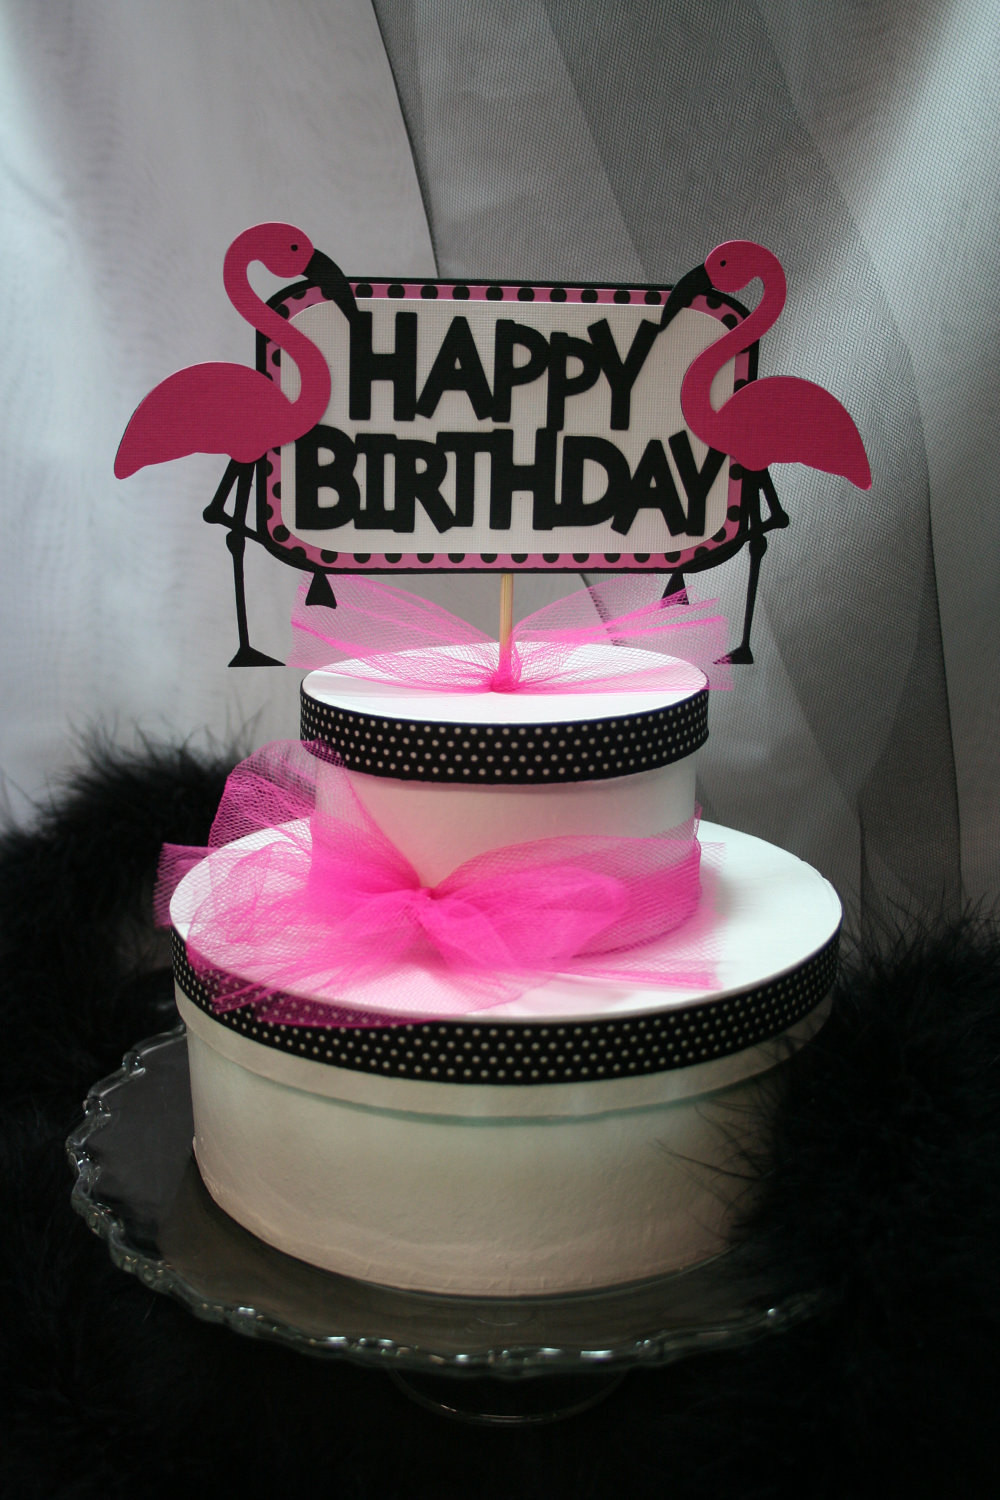 Best ideas about Flamingo Birthday Cake
. Save or Pin Flamingo Birthday Cake Topper Now.